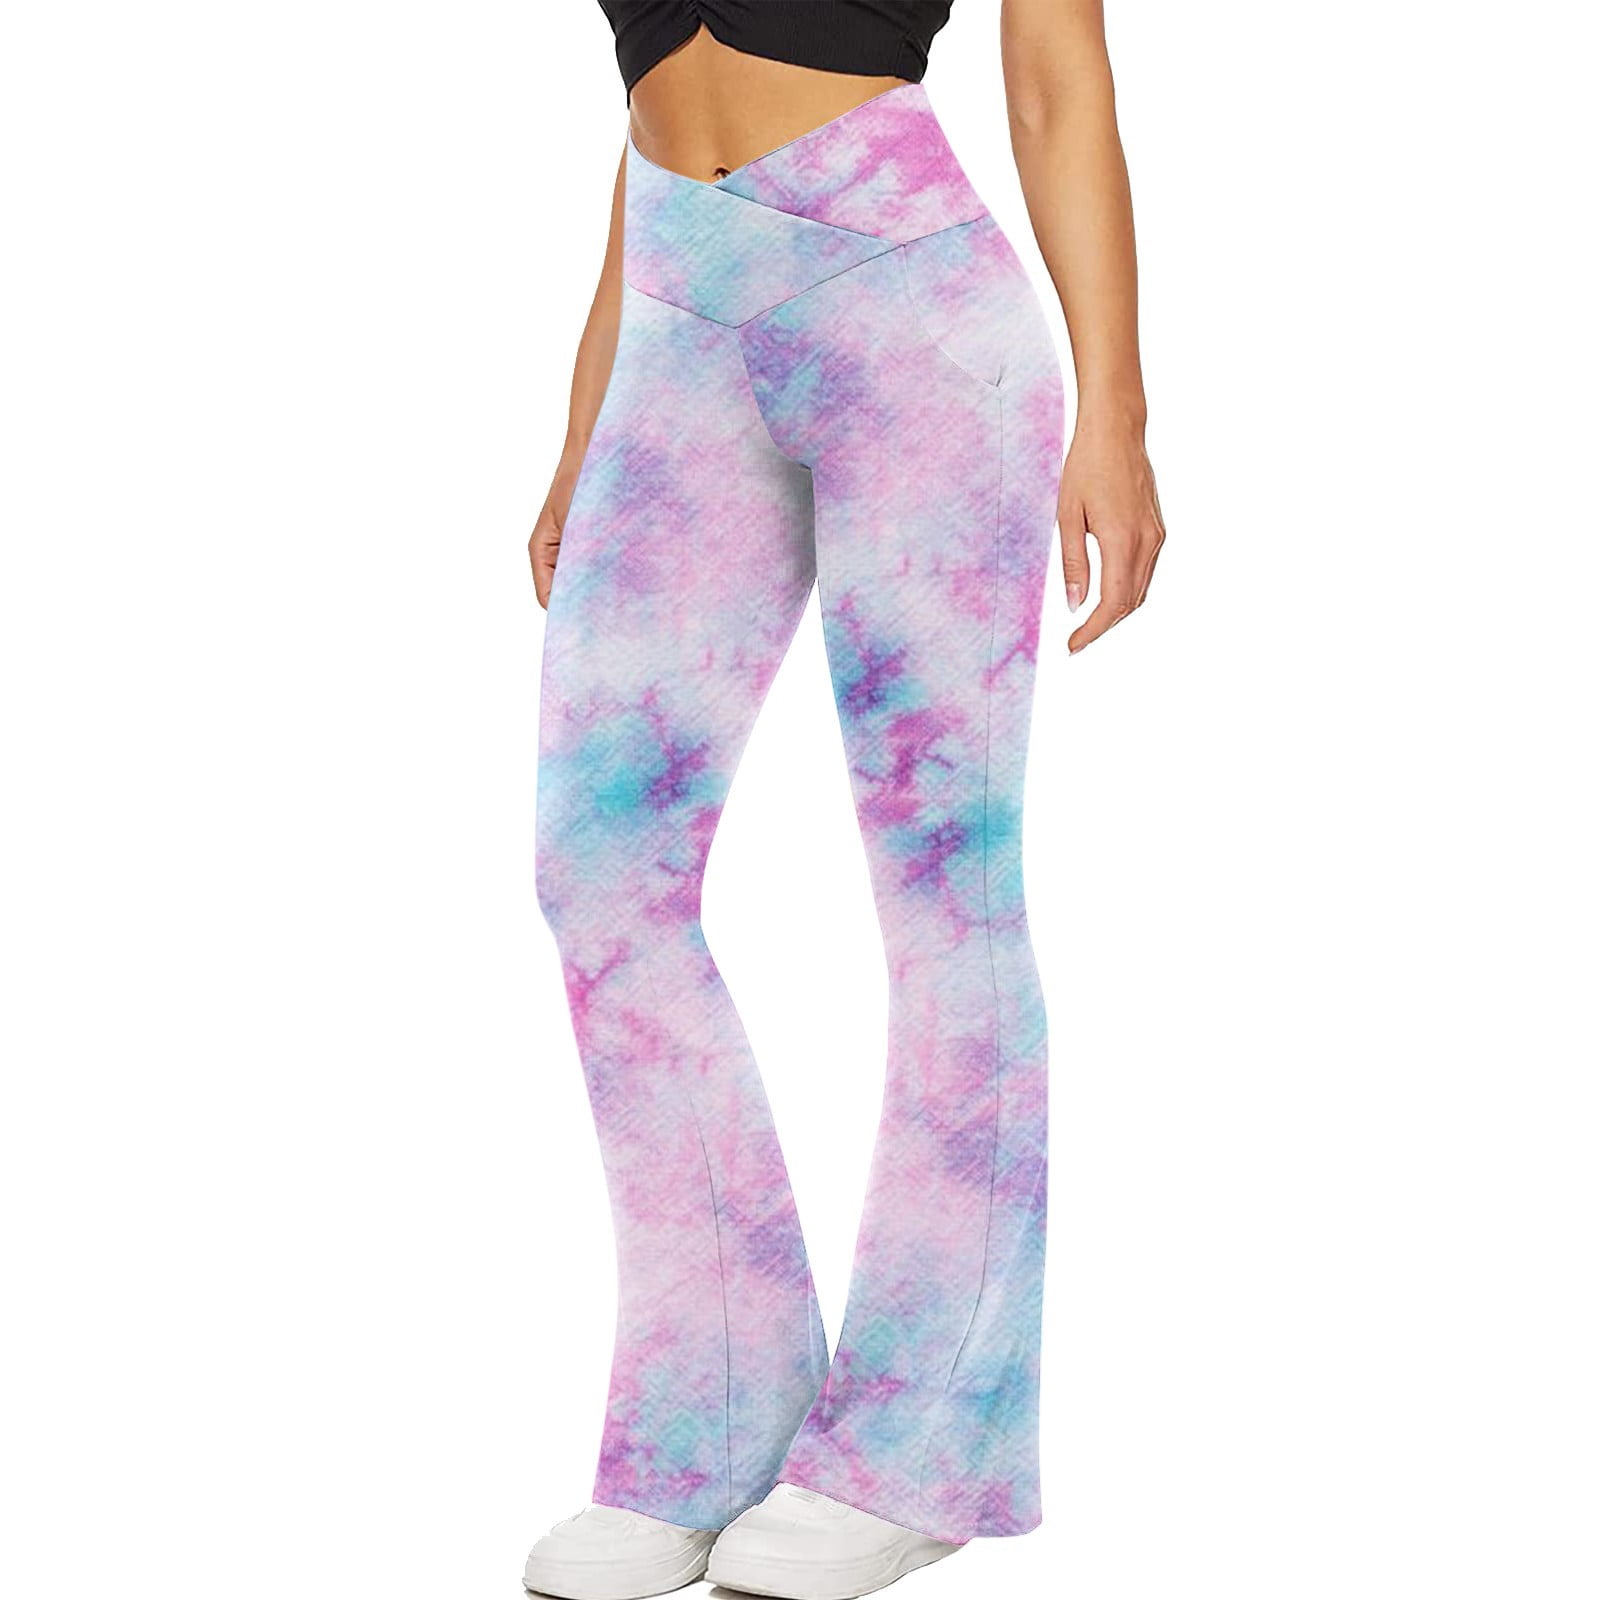 I&S Emma Style Yoga Pants for Women Bootcut Flare Leggings Tummy